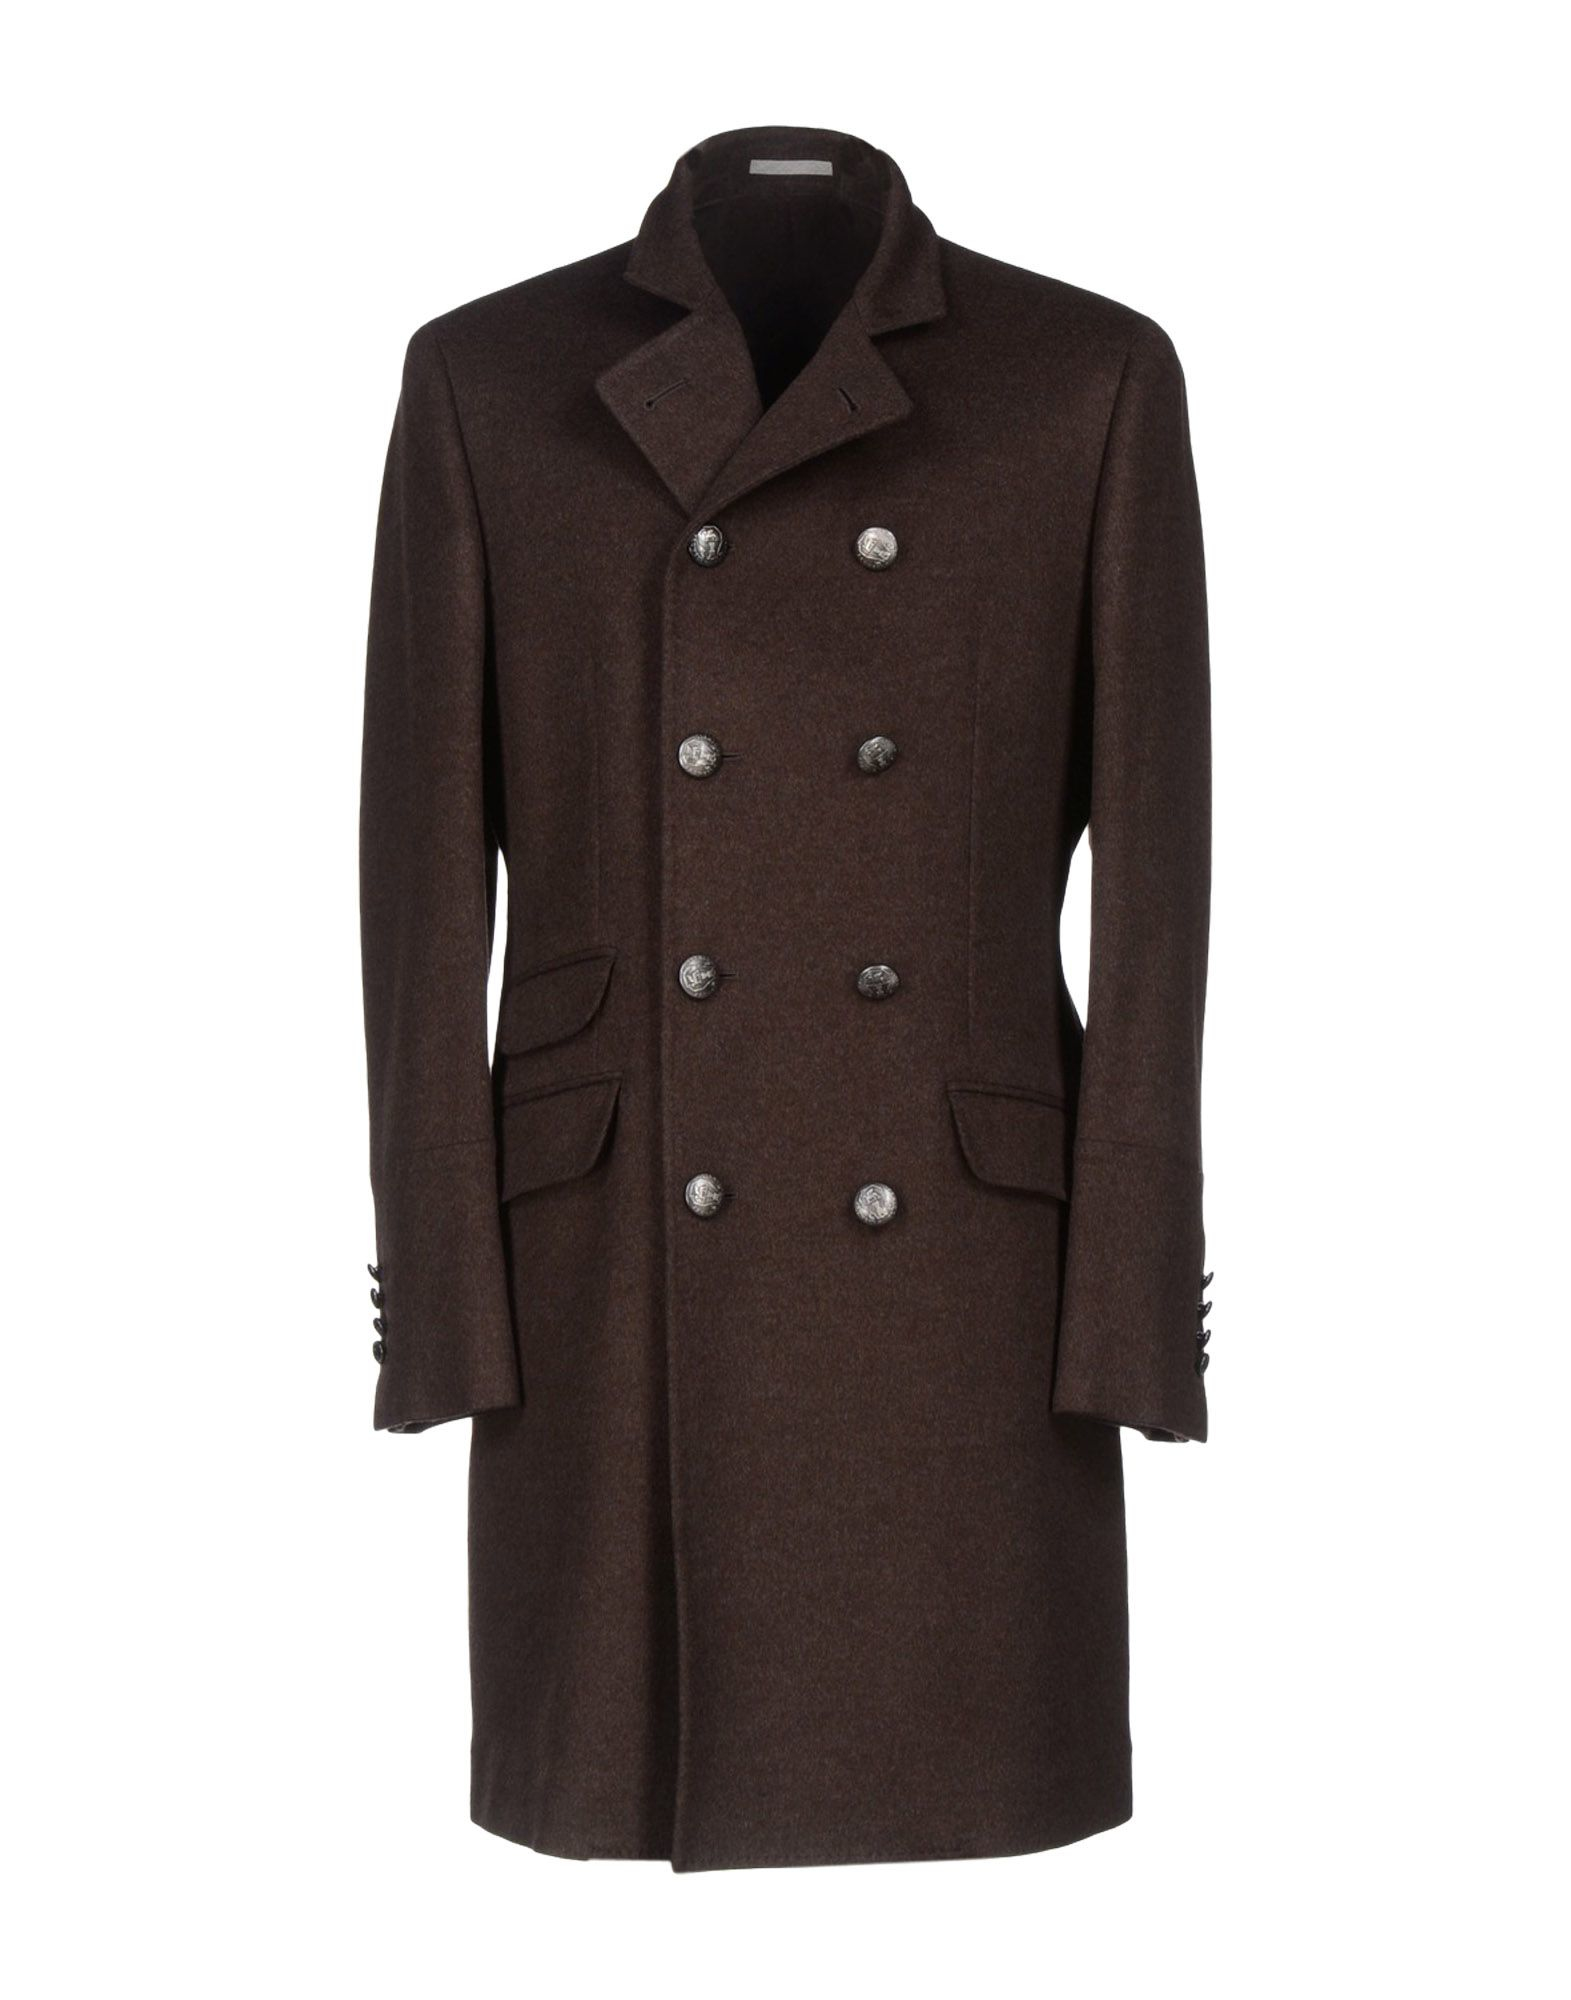 Lyst - Brunello Cucinelli Coat in Brown for Men